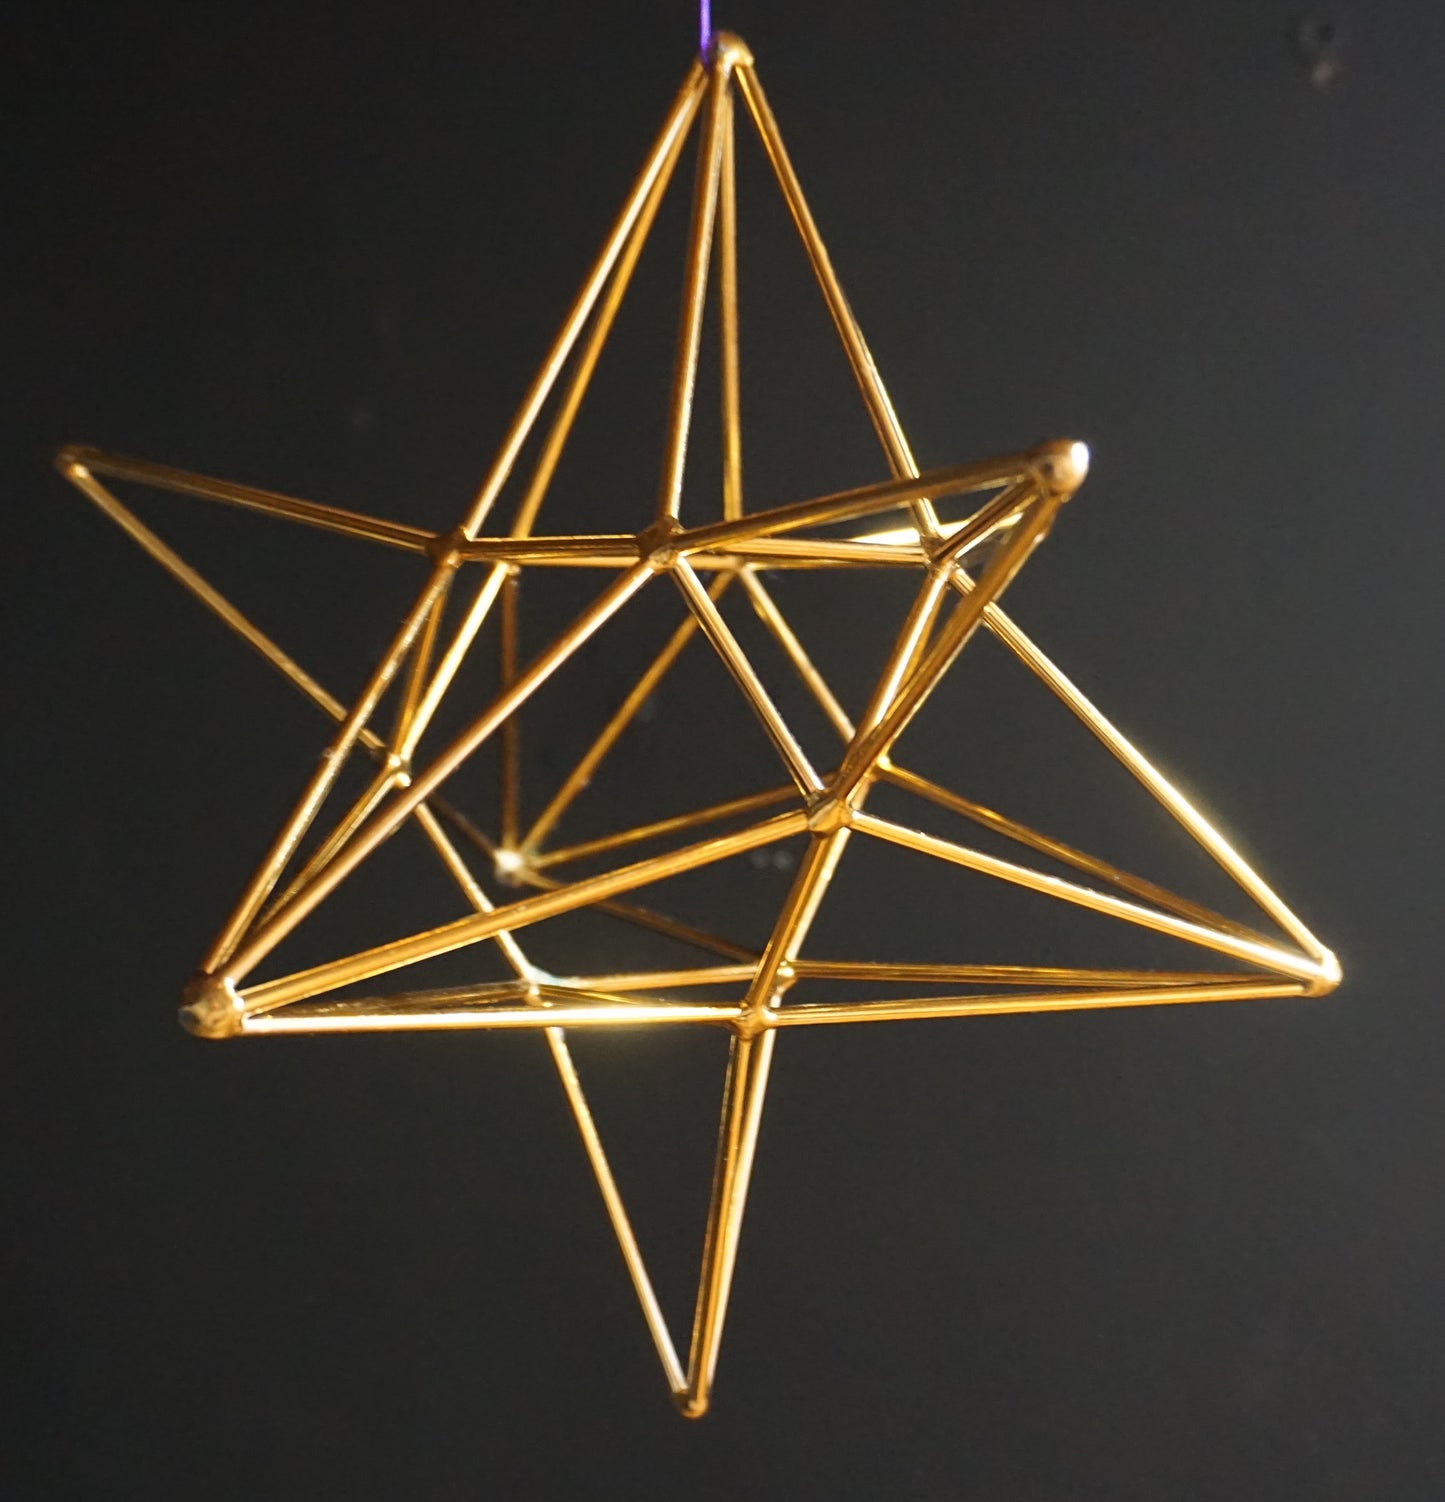 Ref.ST0051 - Iconic Pyra Star